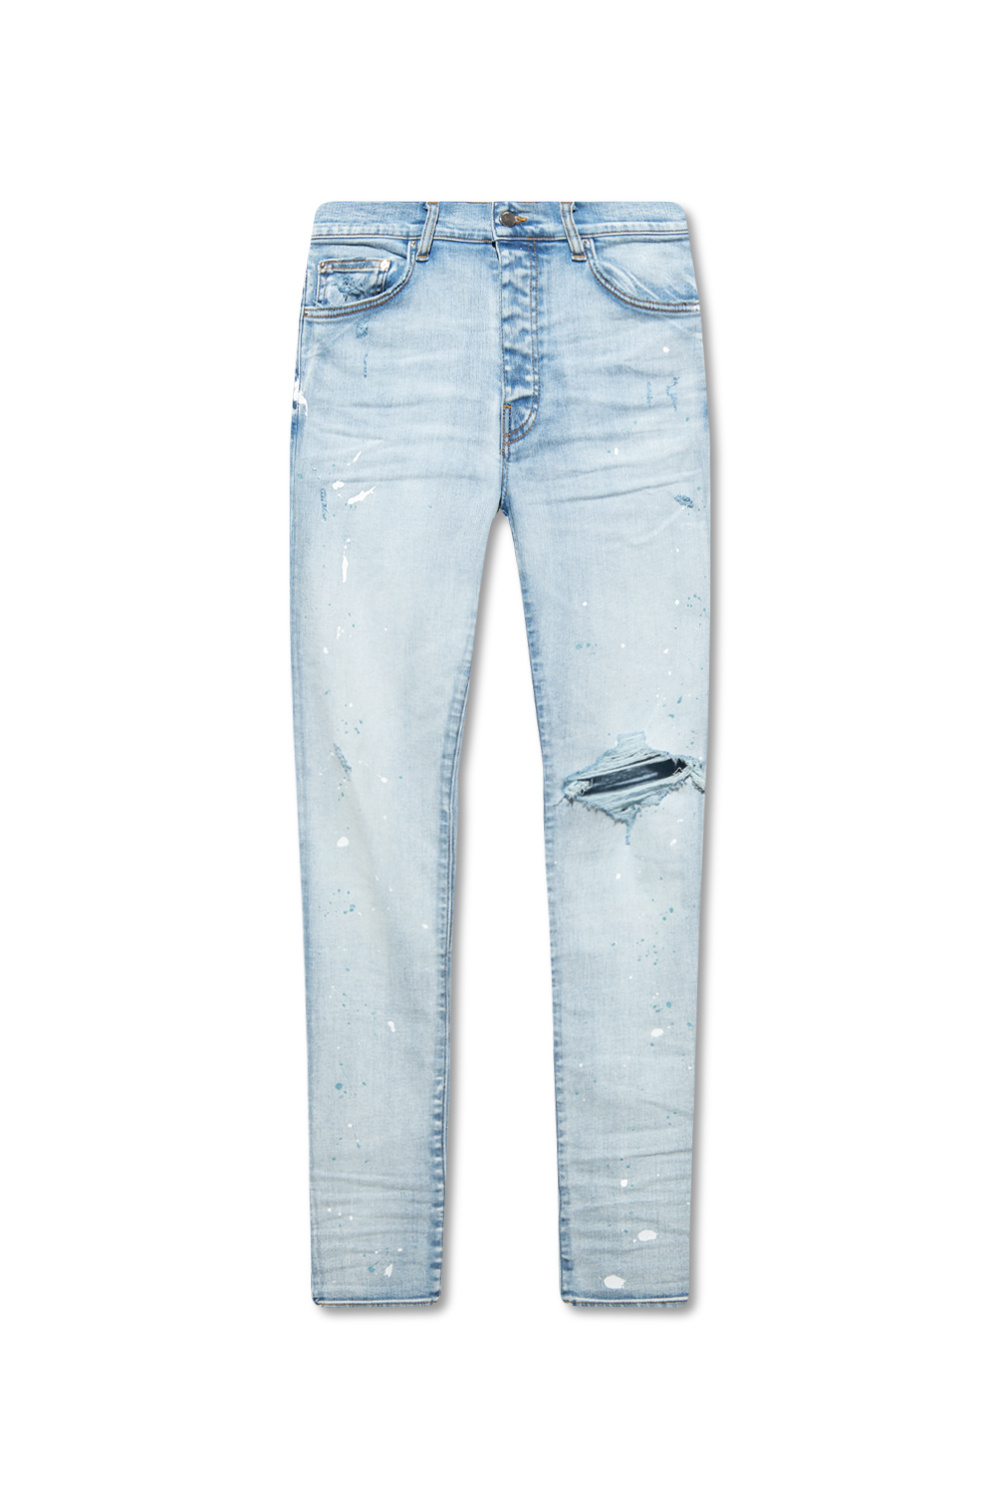 Amiri Paint-splattered jeans | Men's Clothing | Vitkac